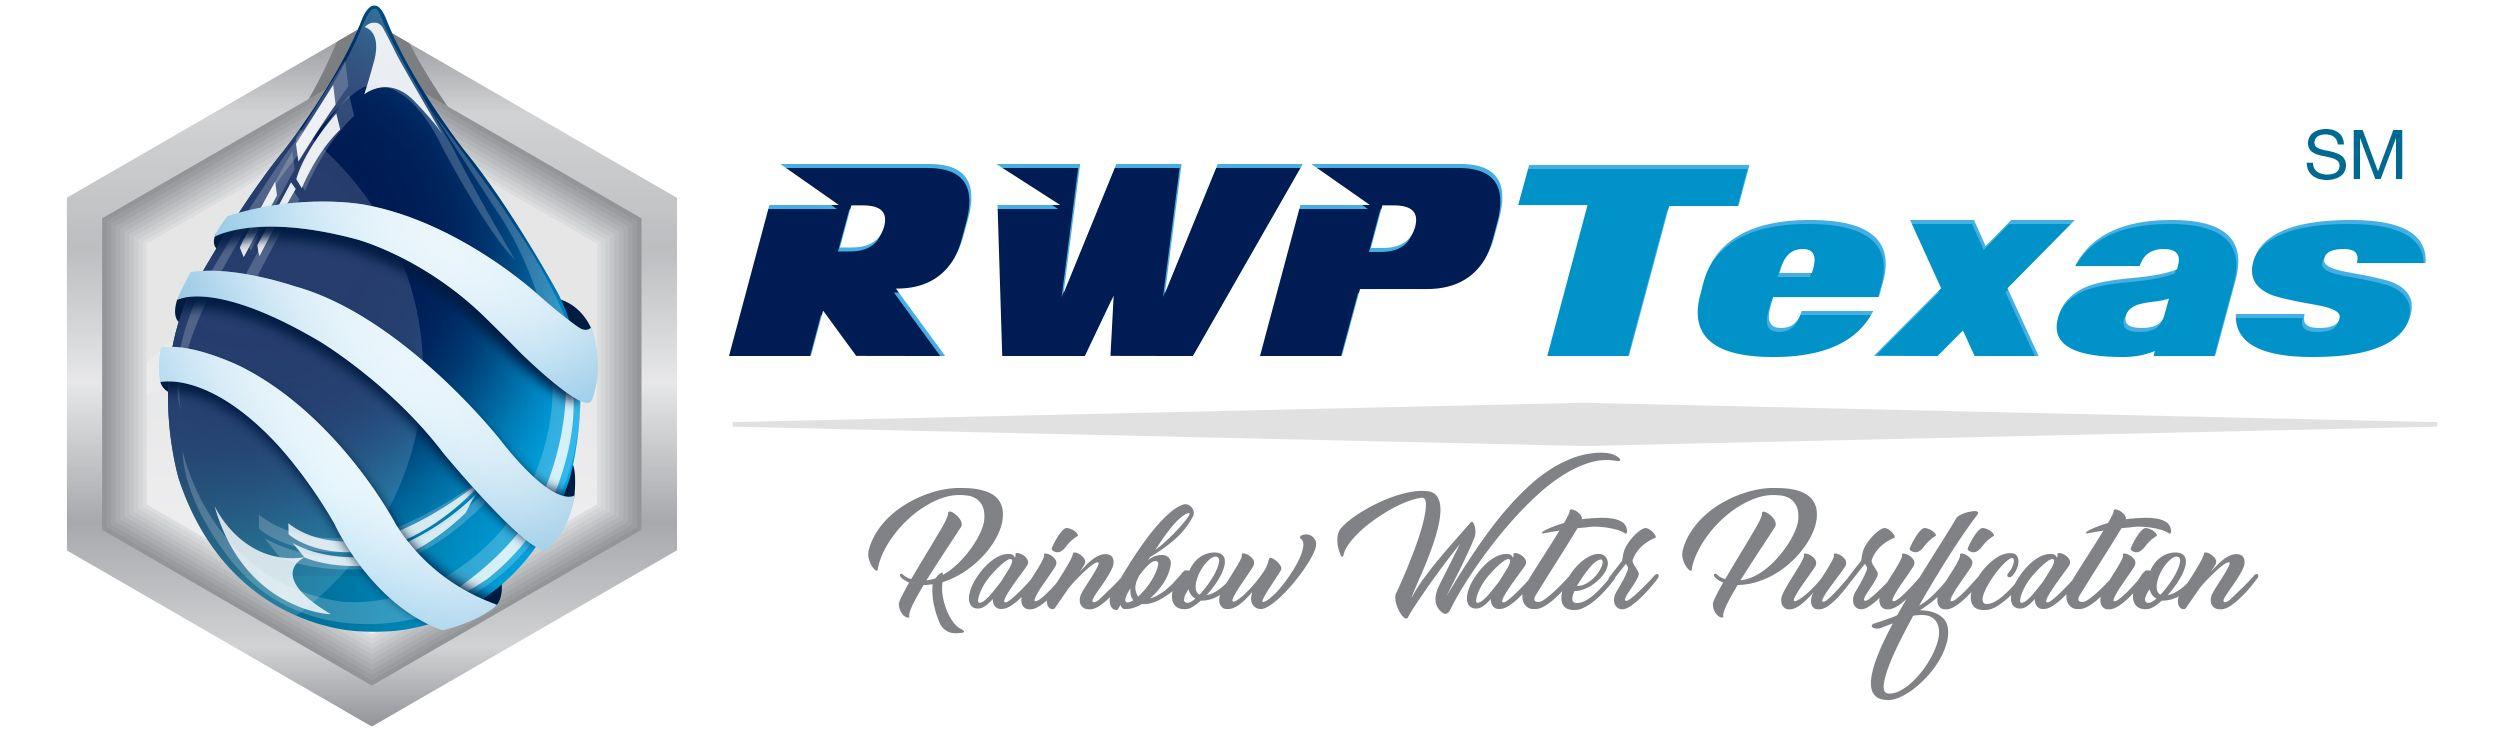 Rainbow Water Logo - Rainbow Water Purification